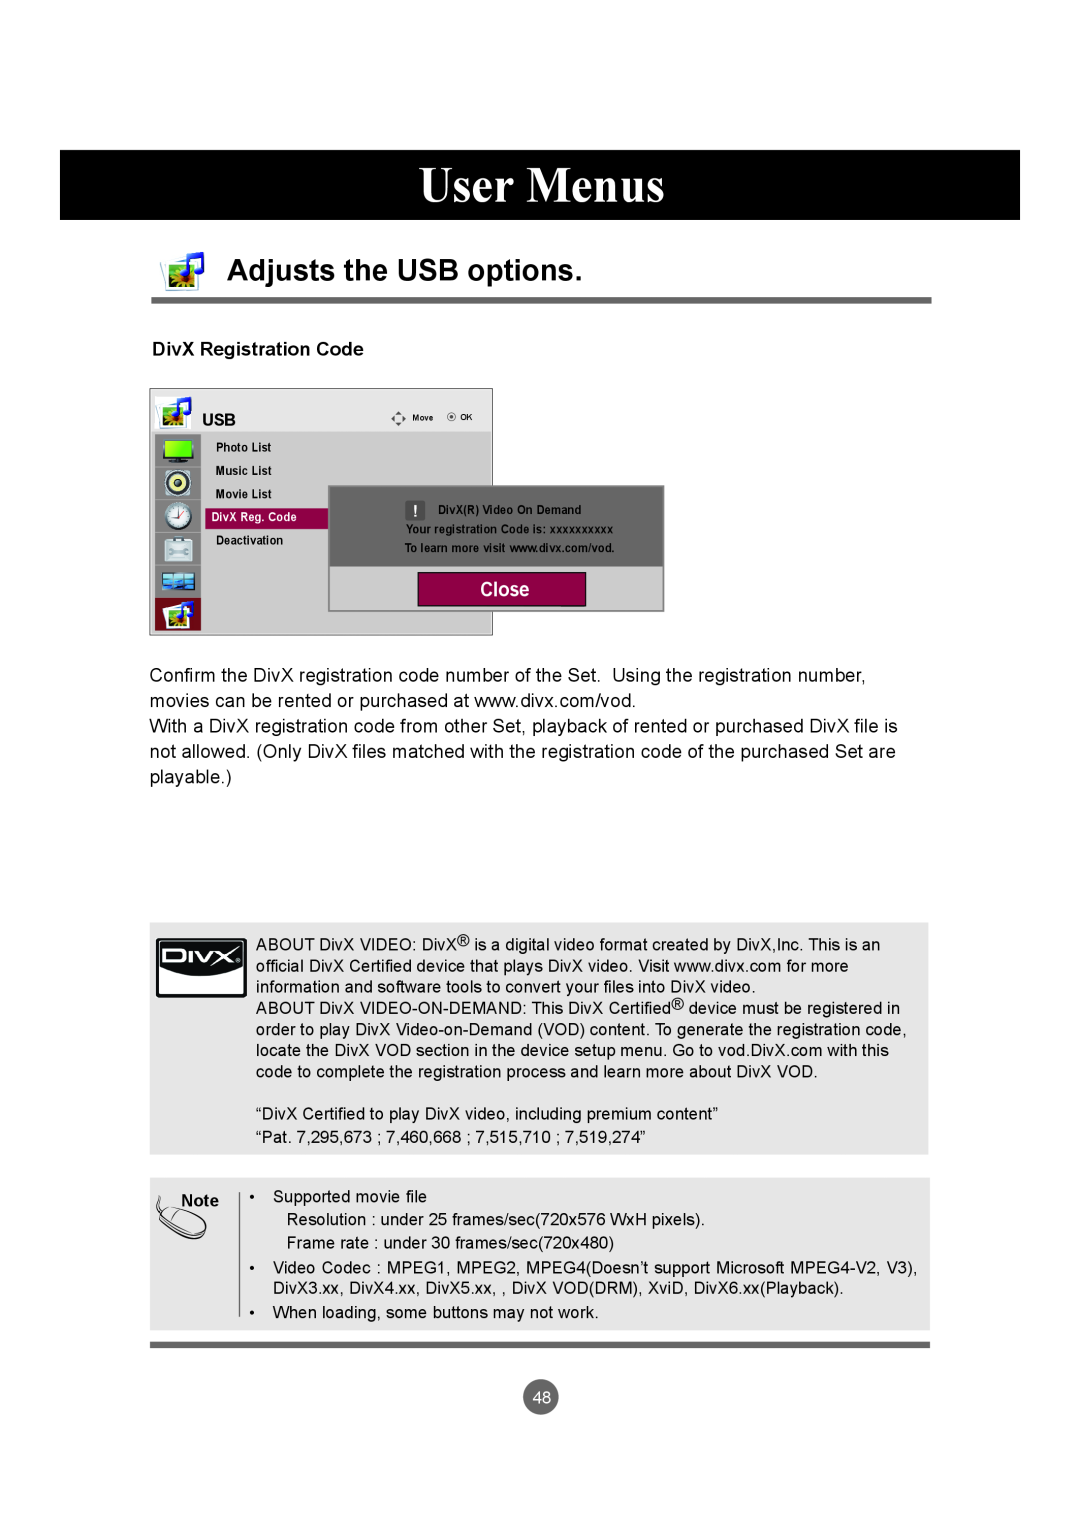 LG Electronics M4720C, M5520C owner manual User Menus, Adjusts the USB options, Close, DivX Registration Code 